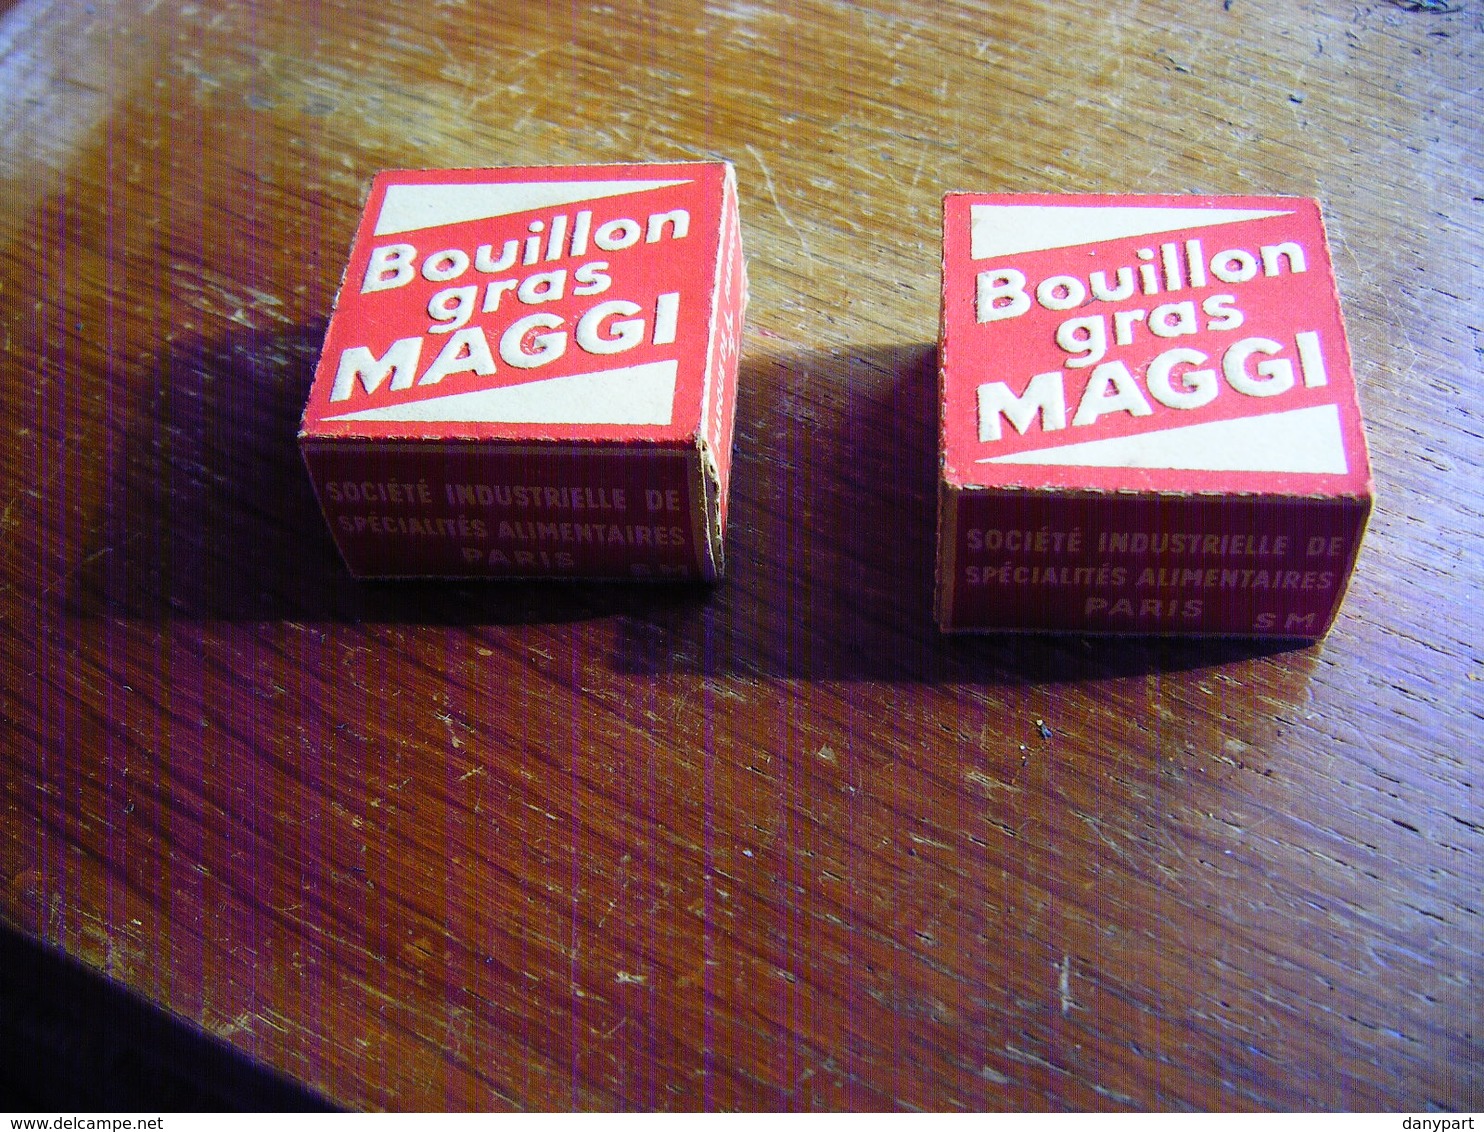 MAGGI - RARE PETITES BOITES EN CARTON BOUILLON GRAS MAGGI TABLETTE 1F25 OCTROI NON COMPRIS TRES BON ETAT - Boxes